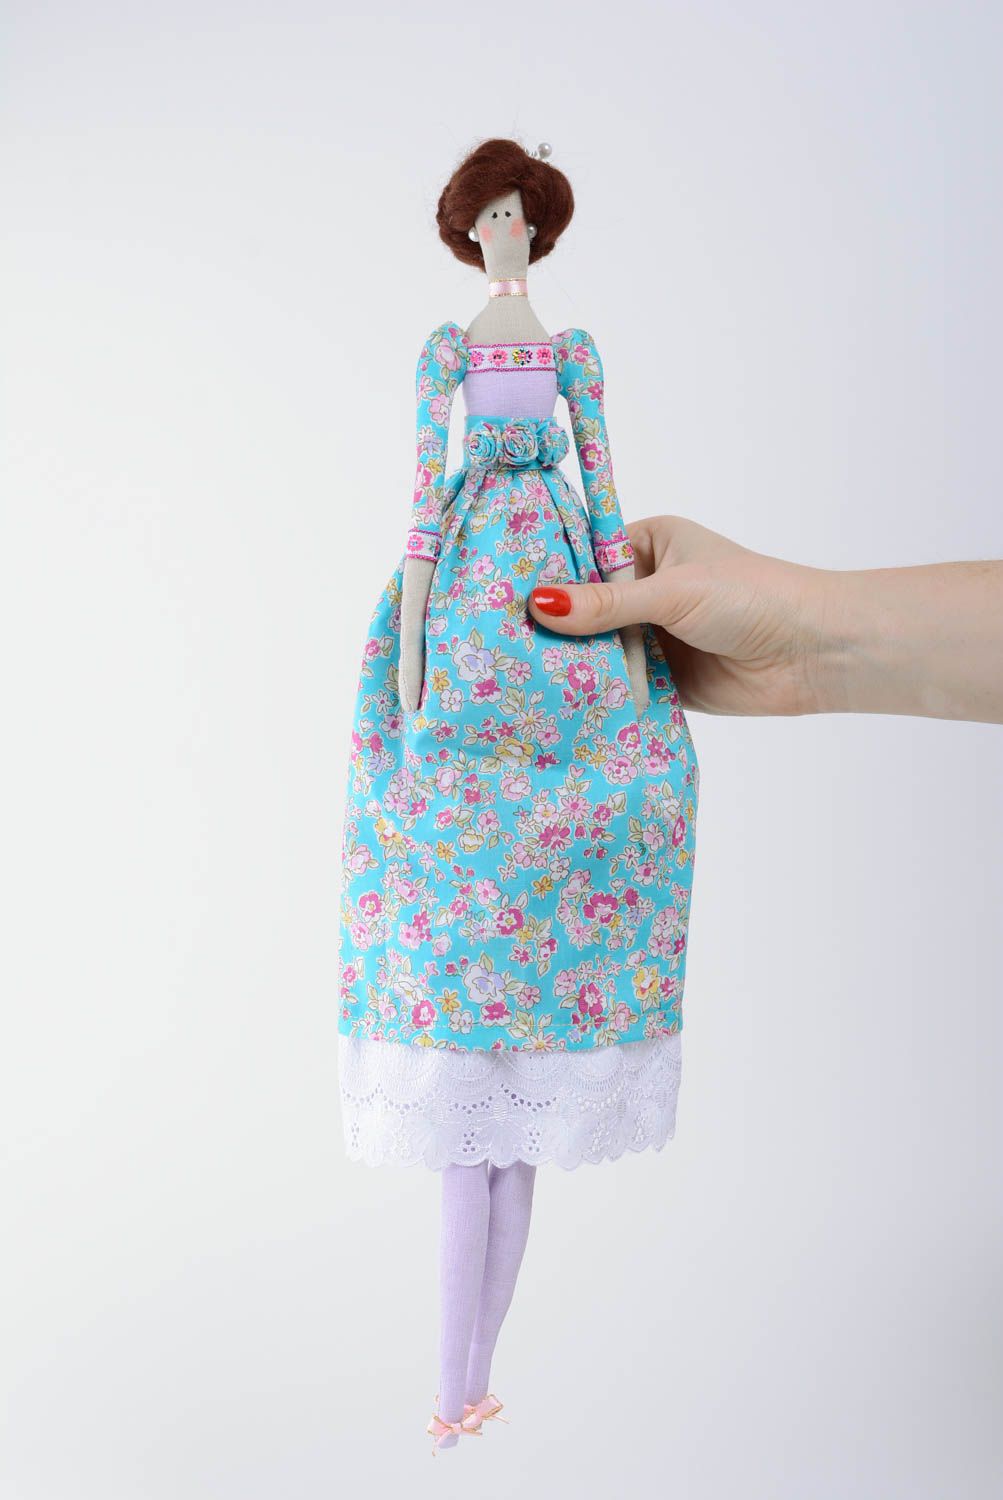 Handmade fabric doll in blue dress beautiful decorative designer interior toy photo 4